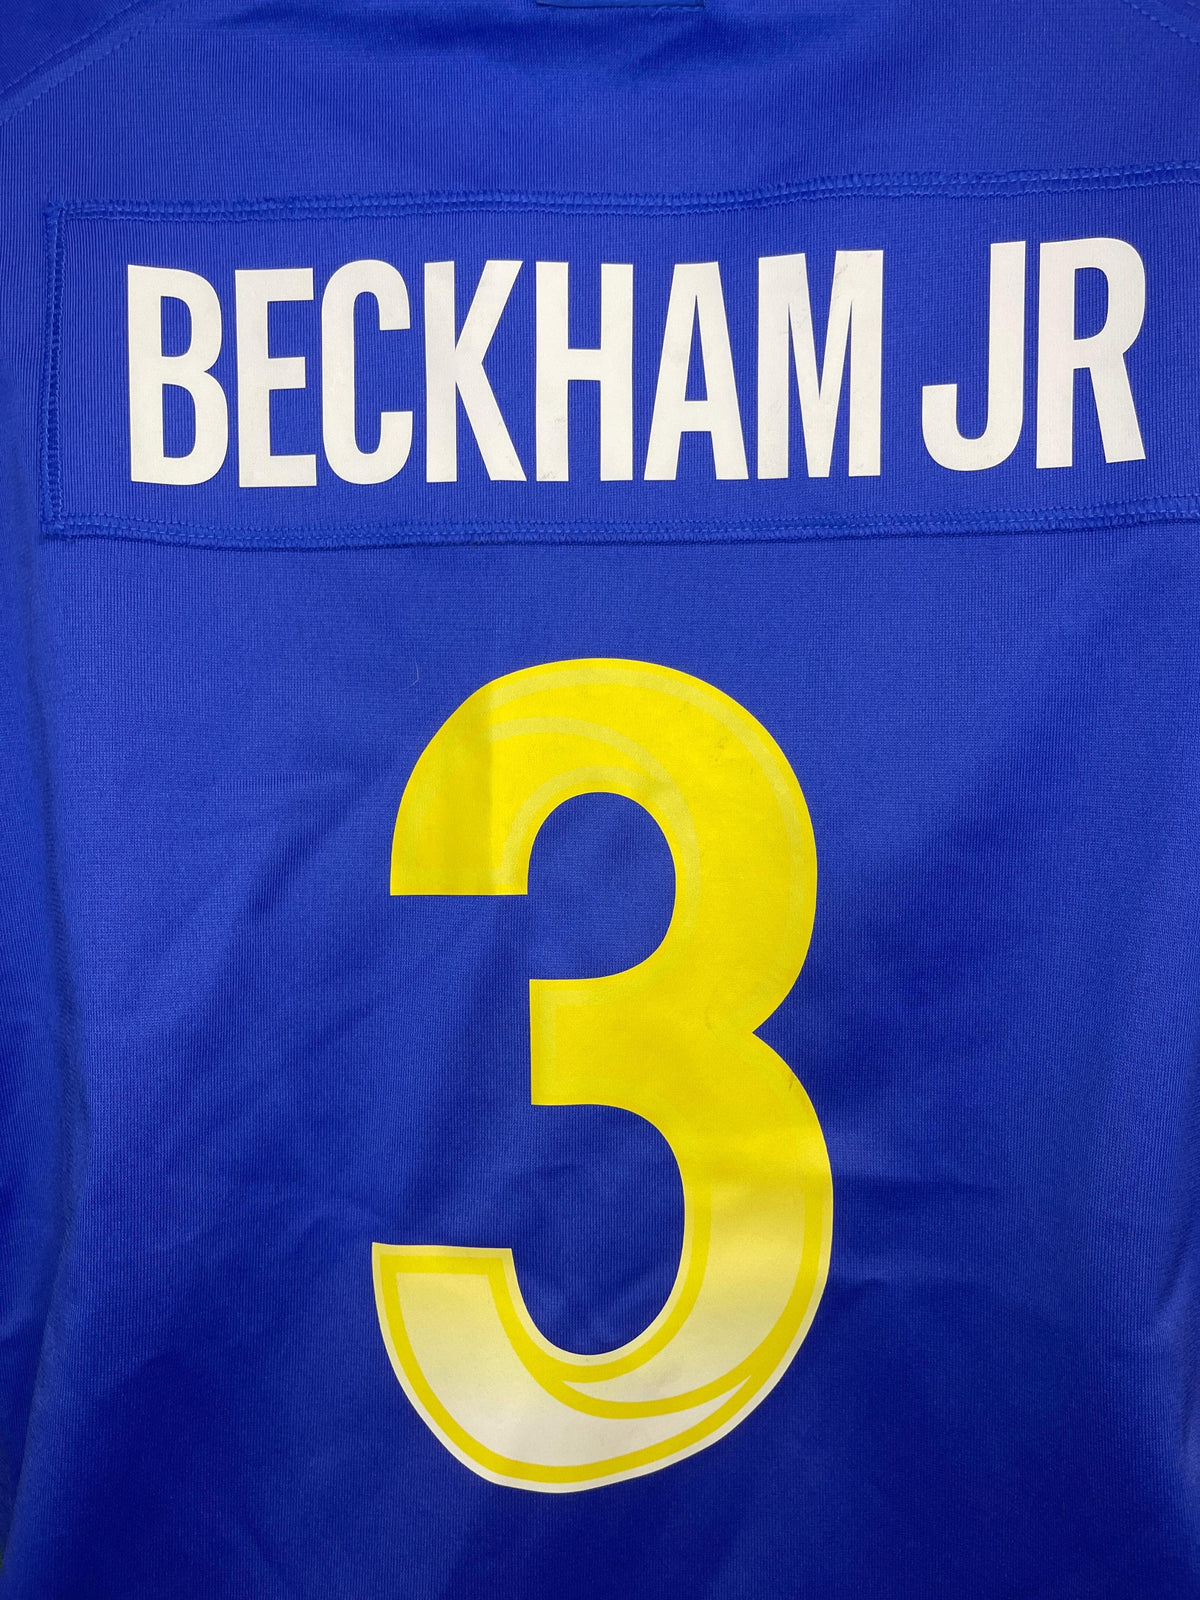 NFL Los Angeles Rams Odell Beckham Jr #3 Game Jersey Women's Medium NWT